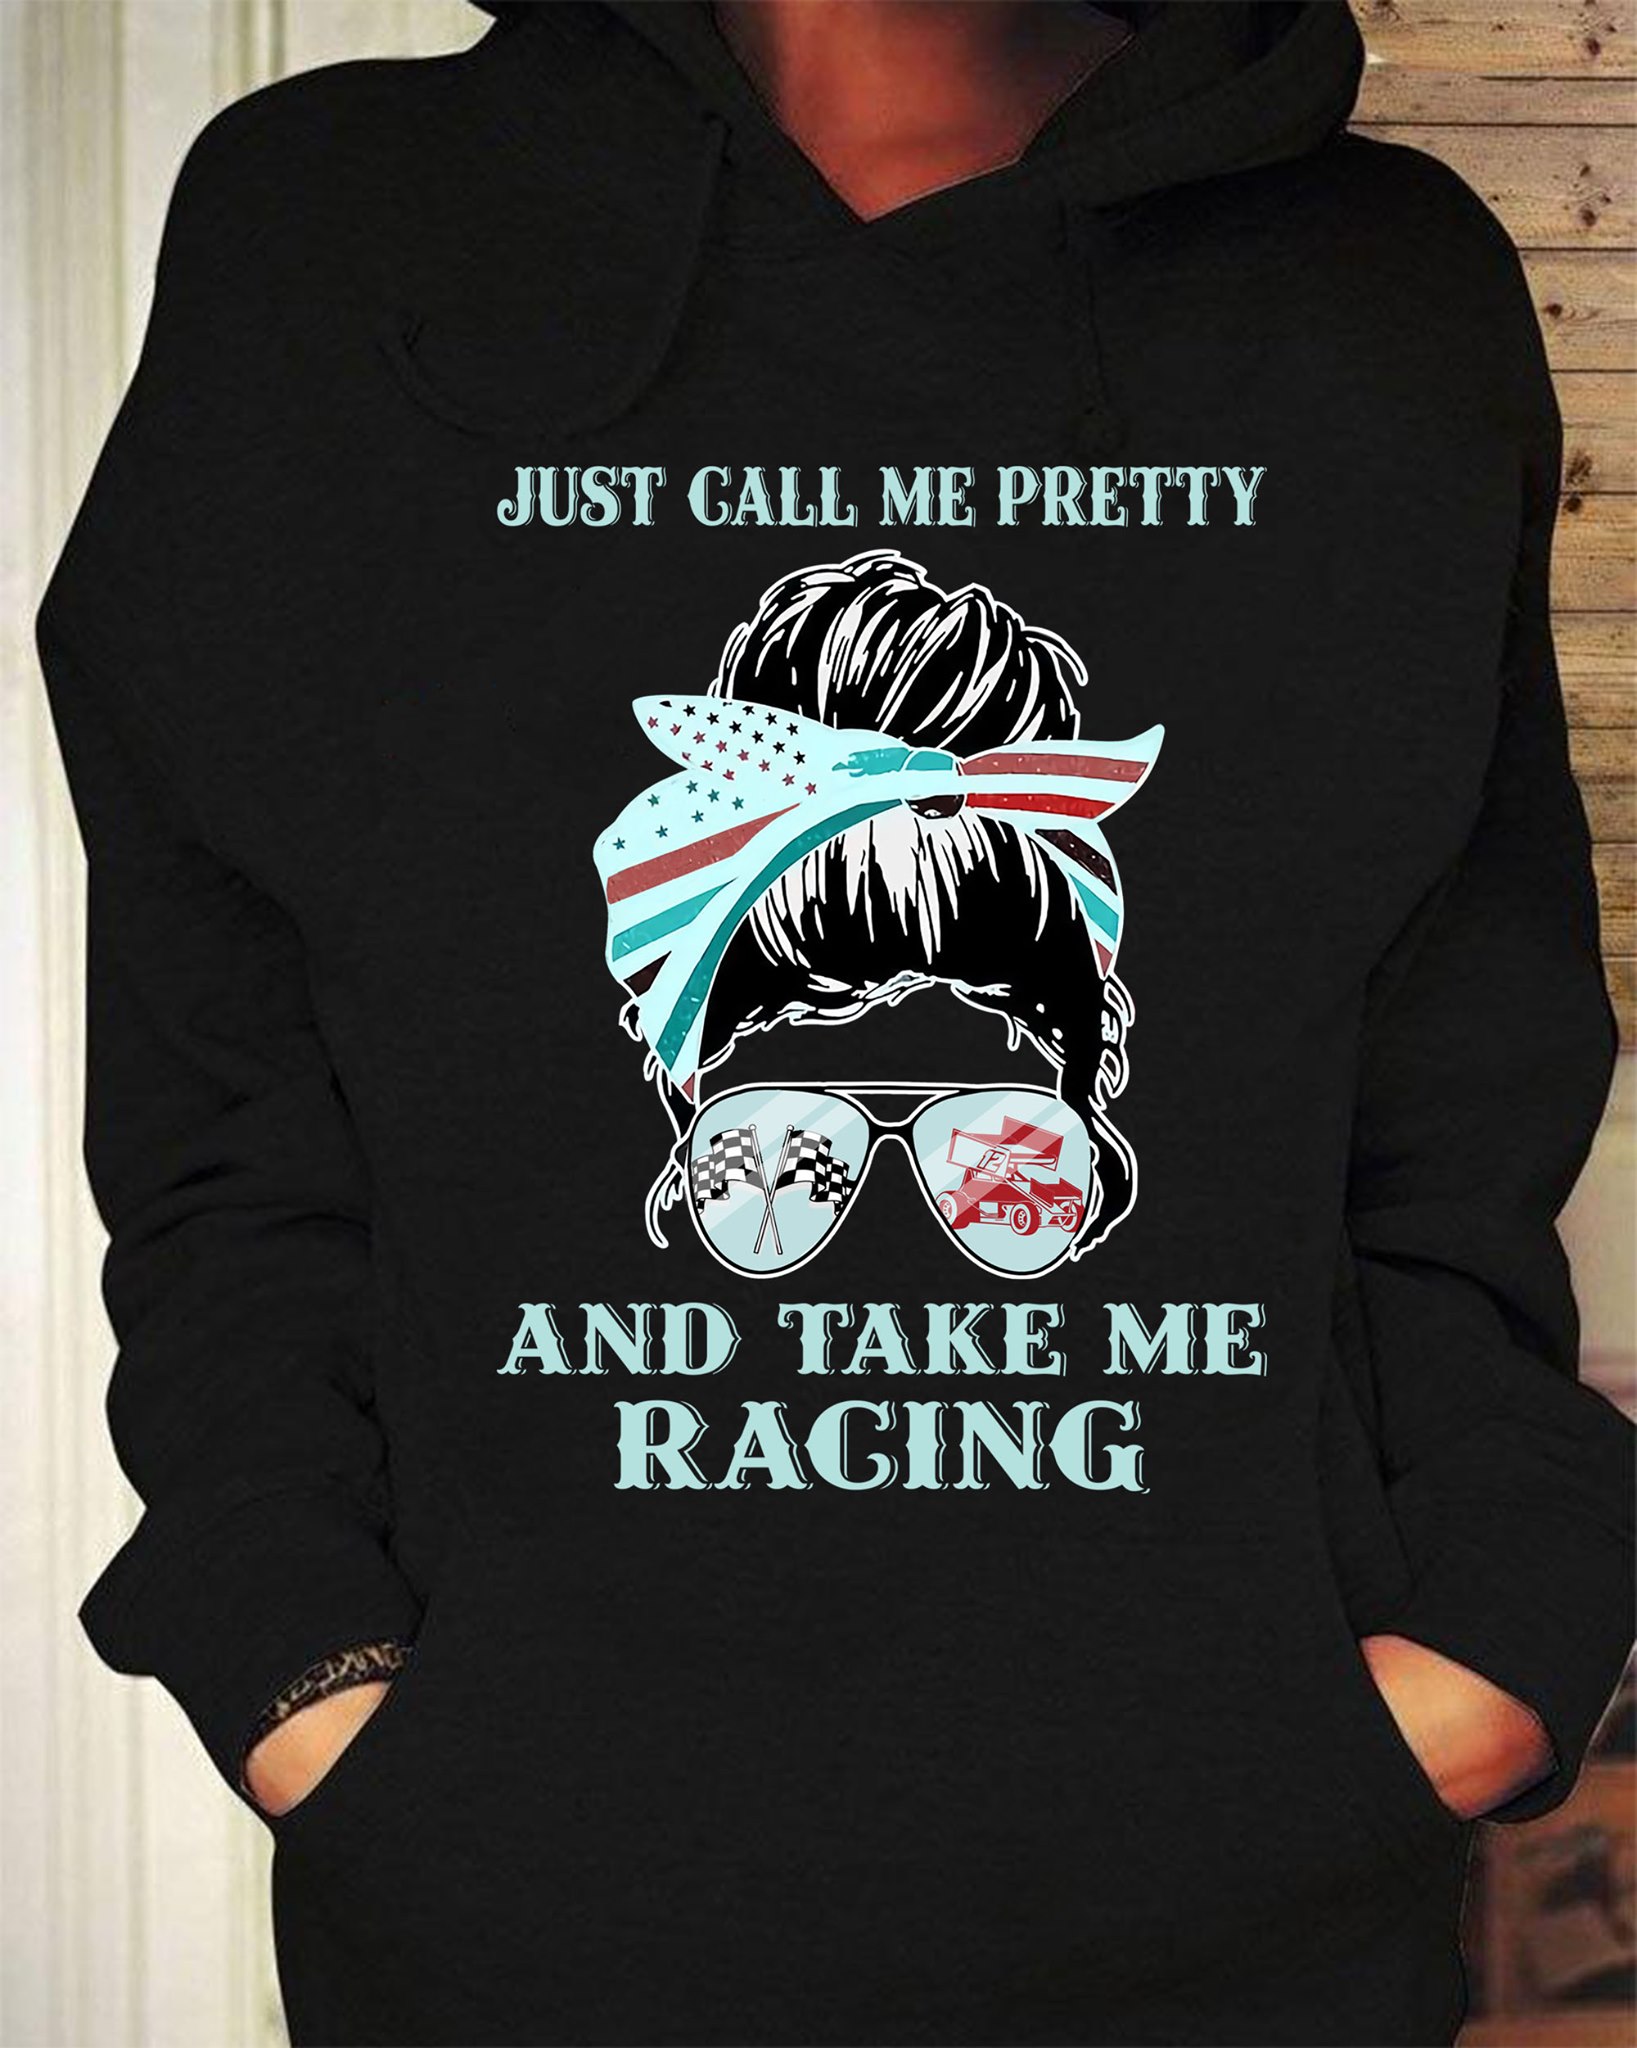 Just call me pretty and take me racing